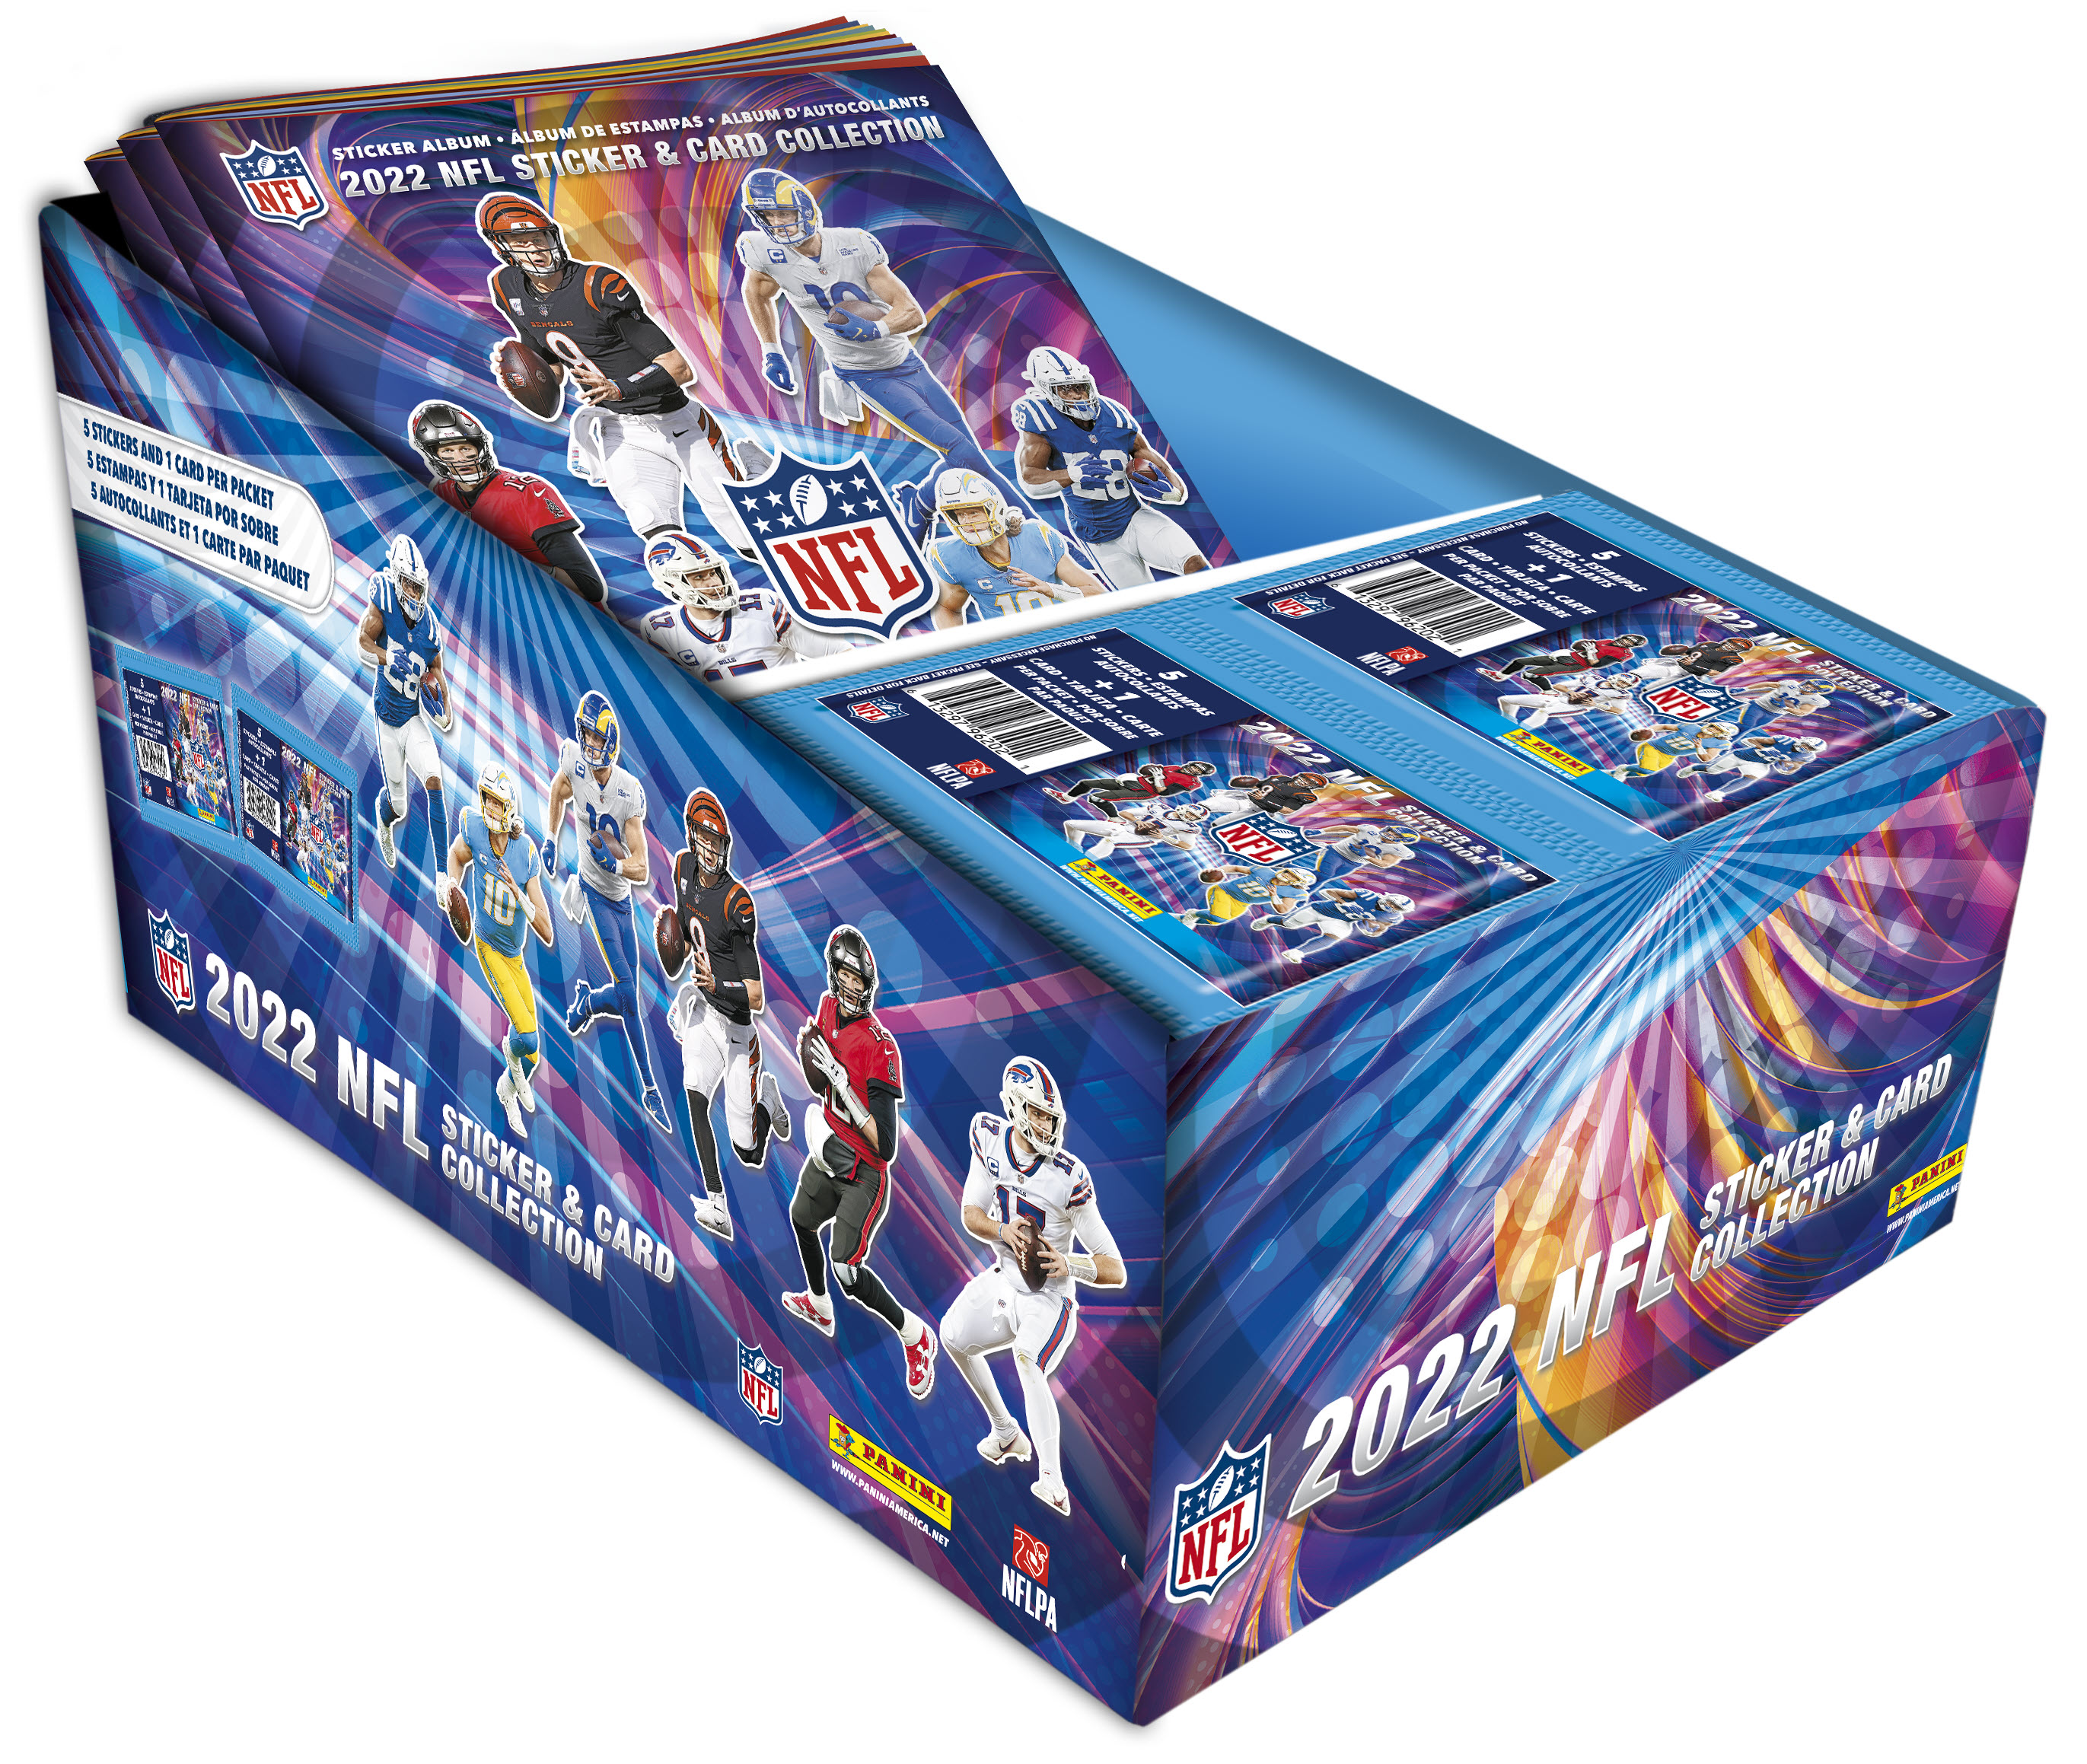 2022 Panini NFL sticker and card collection munimoro.gob.pe